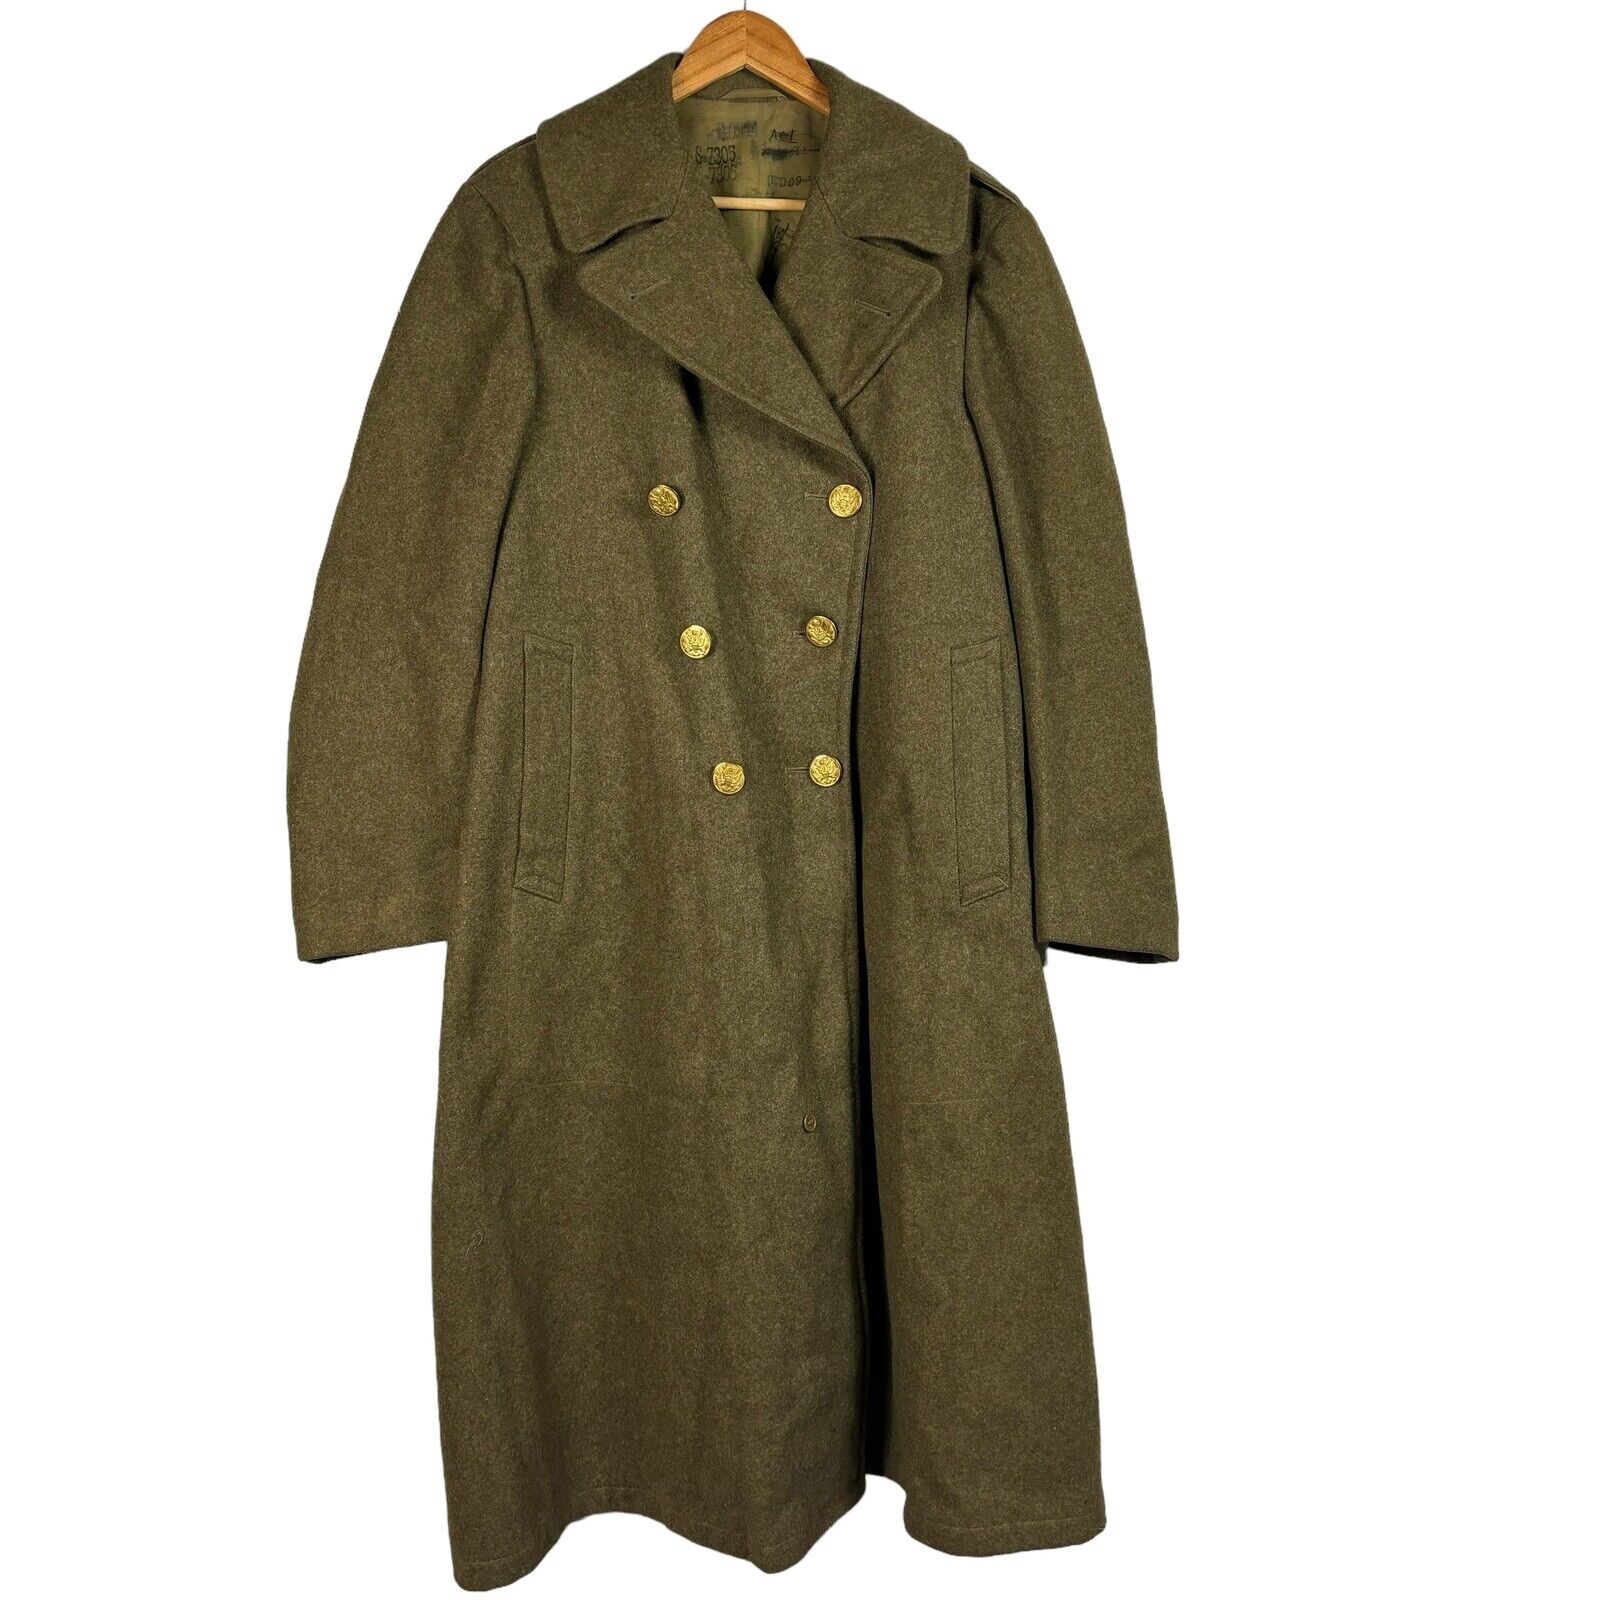 Progressive MFG VTG 1940 WWII Army Military Green Wool Trench Coat Jacket 38R